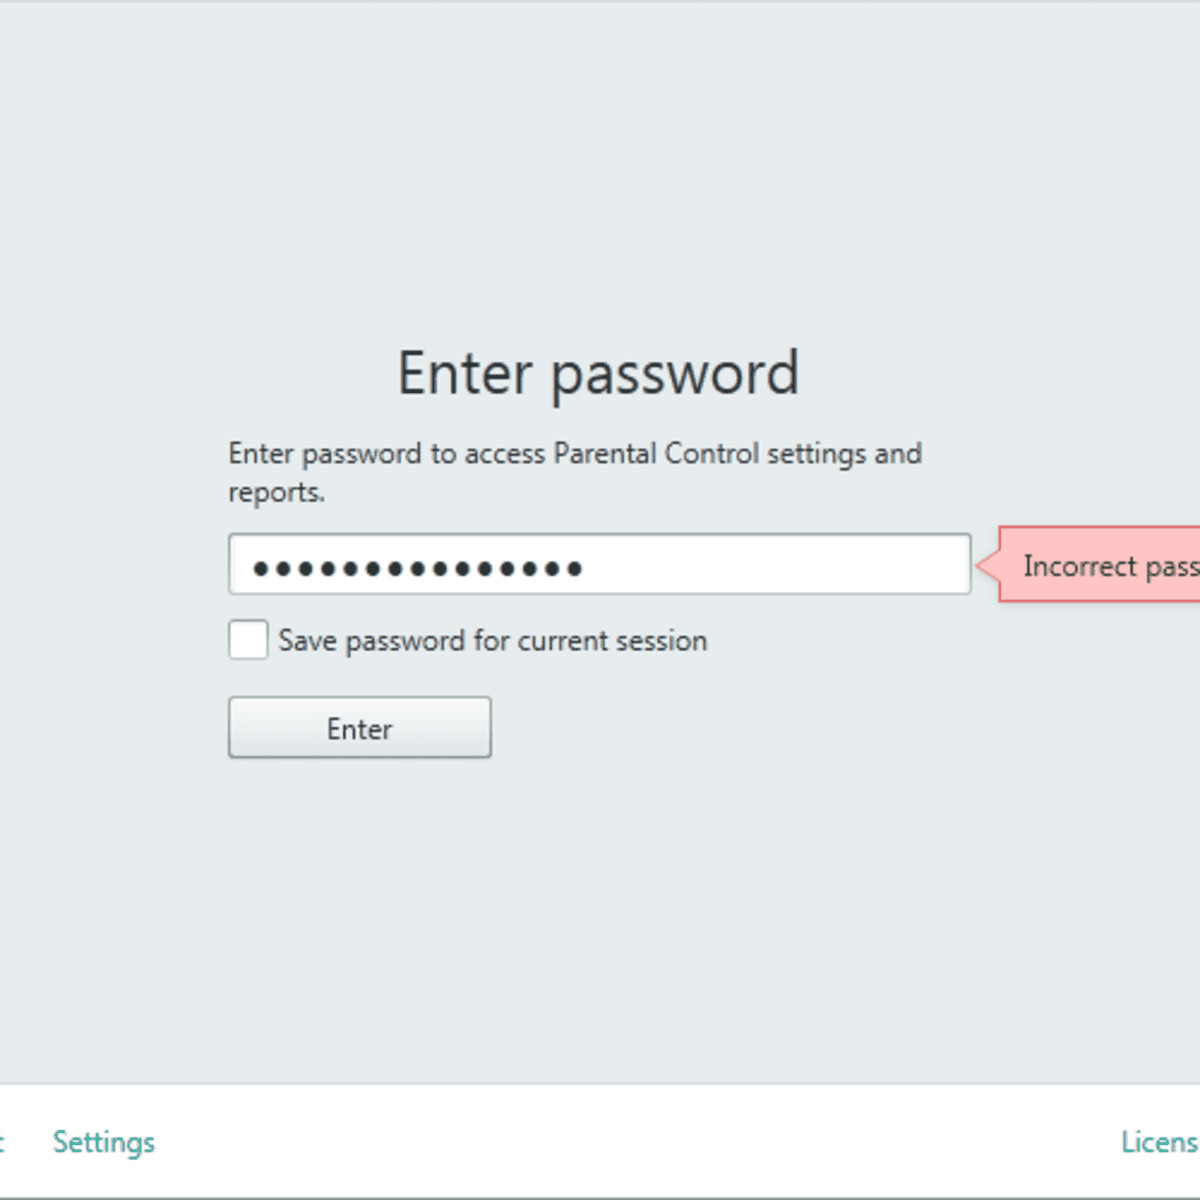 Incorrect password entered